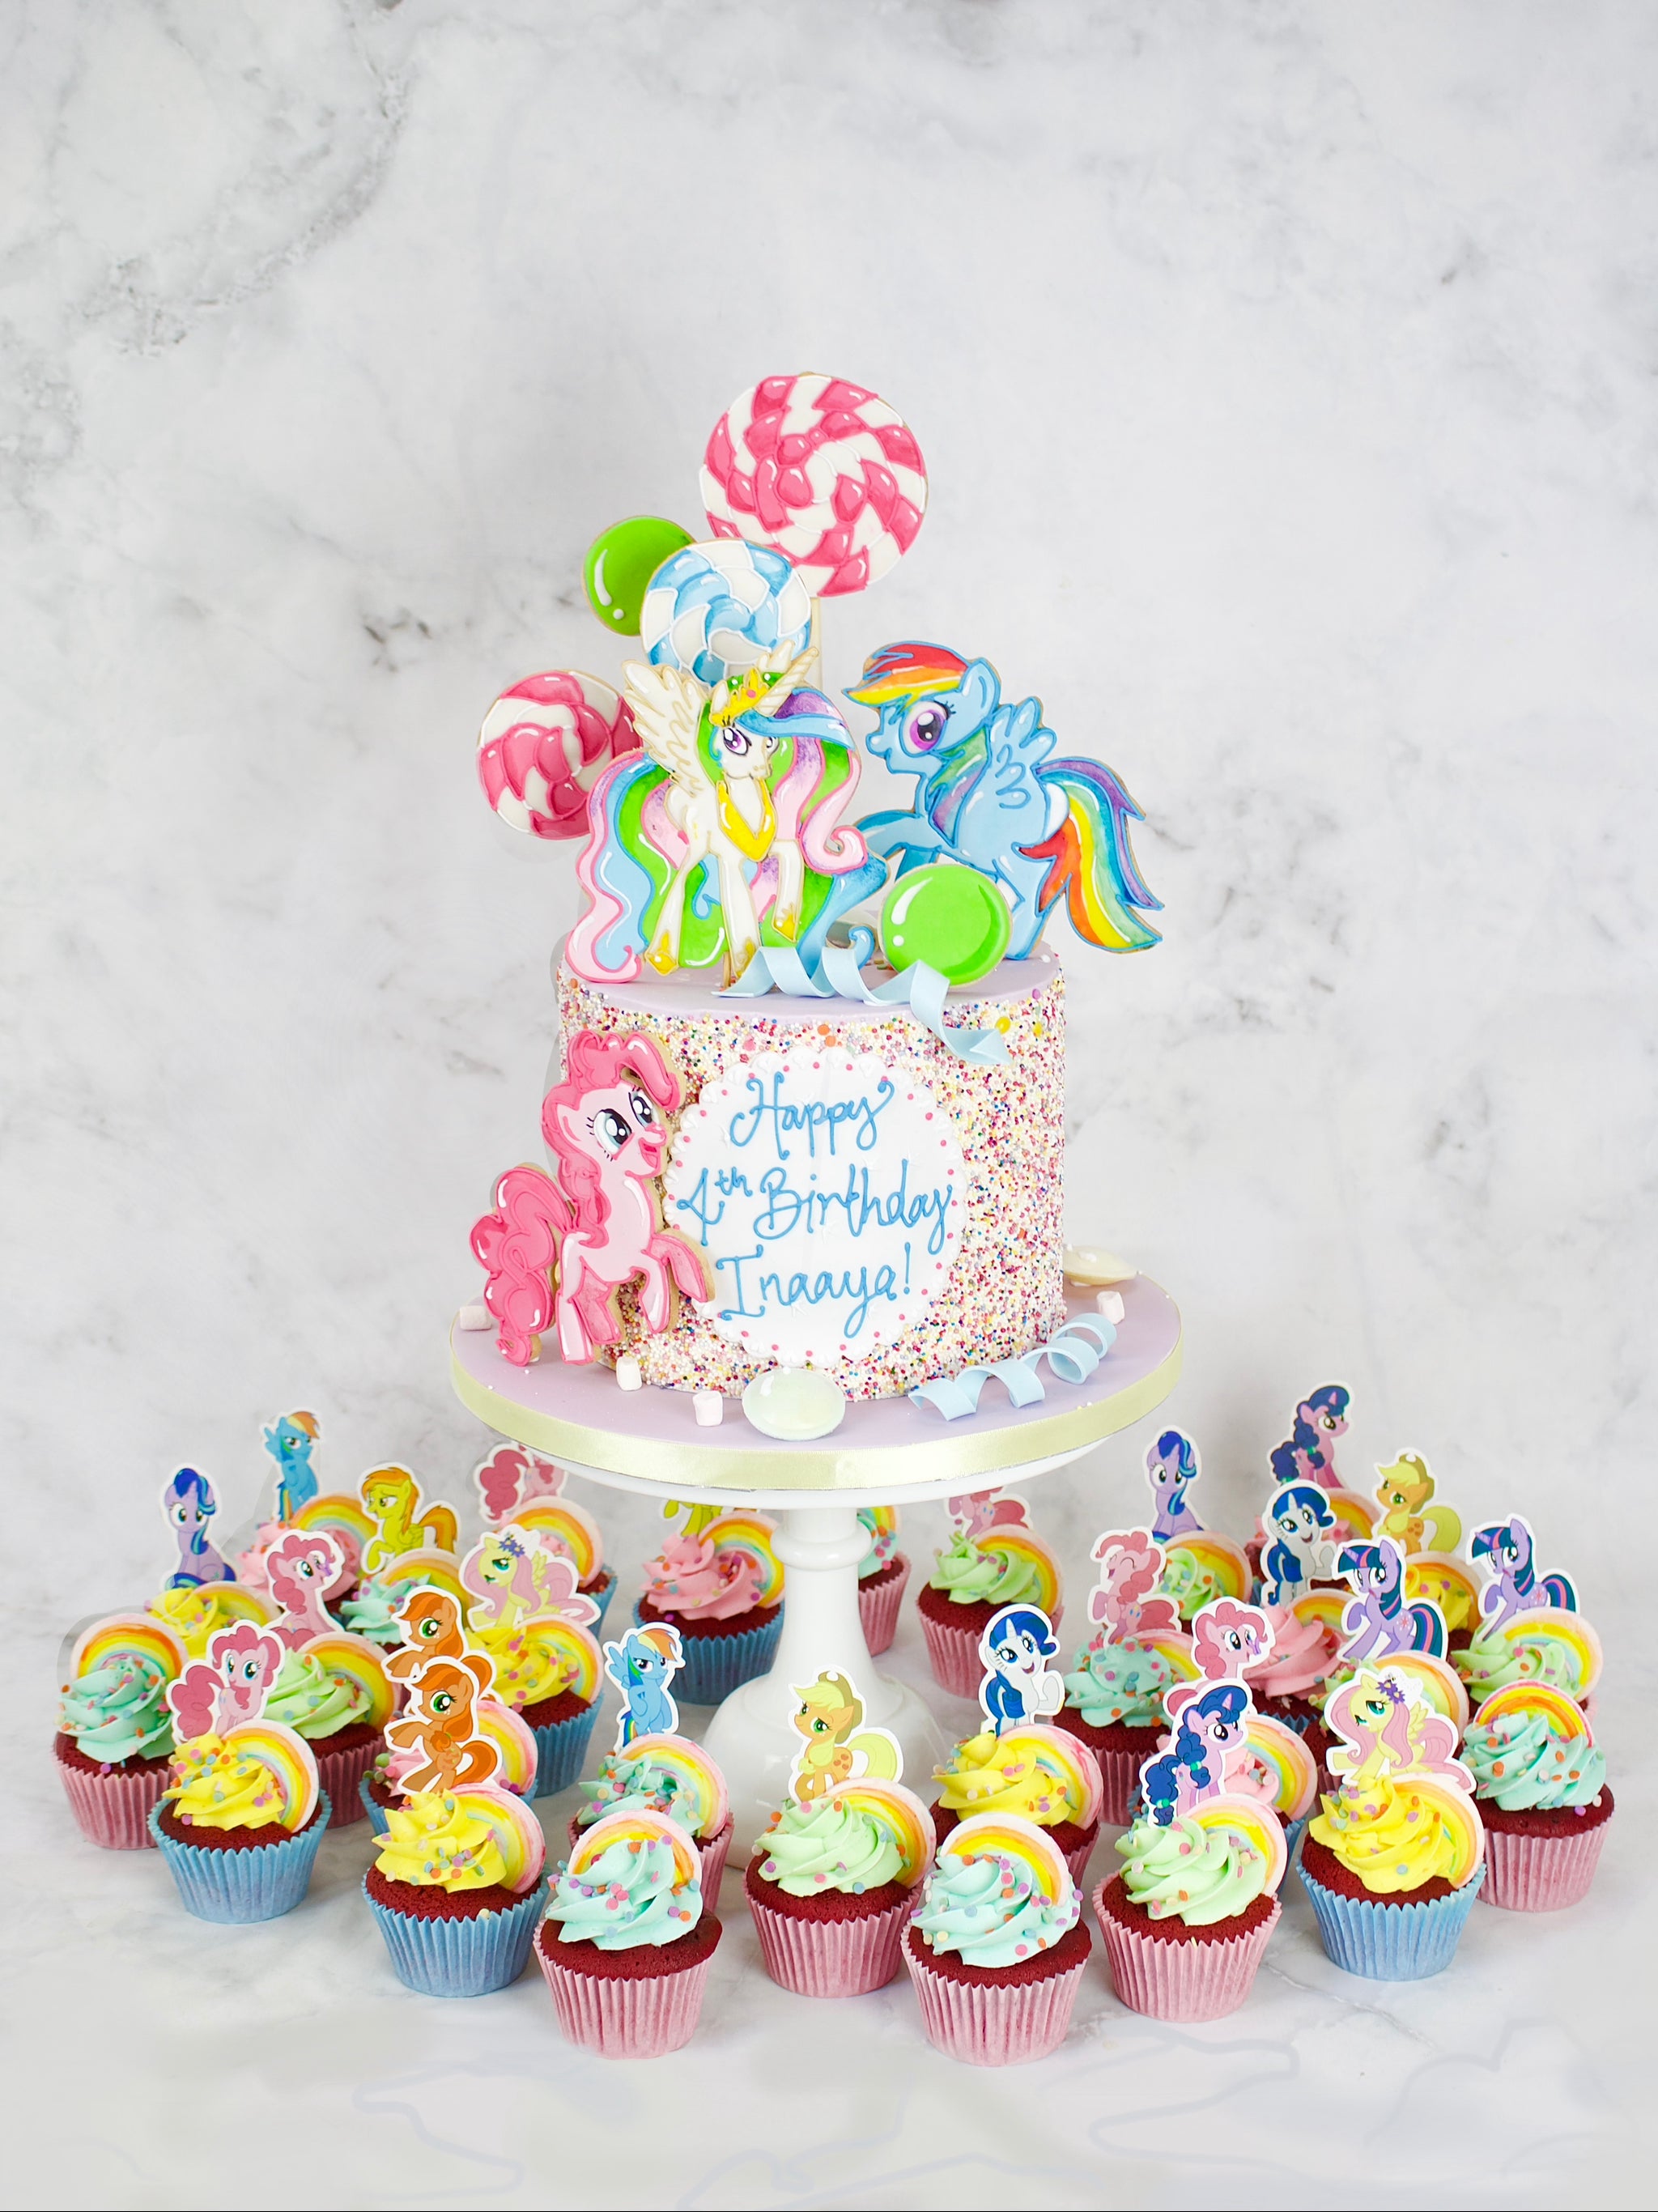 Buy My Little Pony Cake Online at Best Price | YummyCake